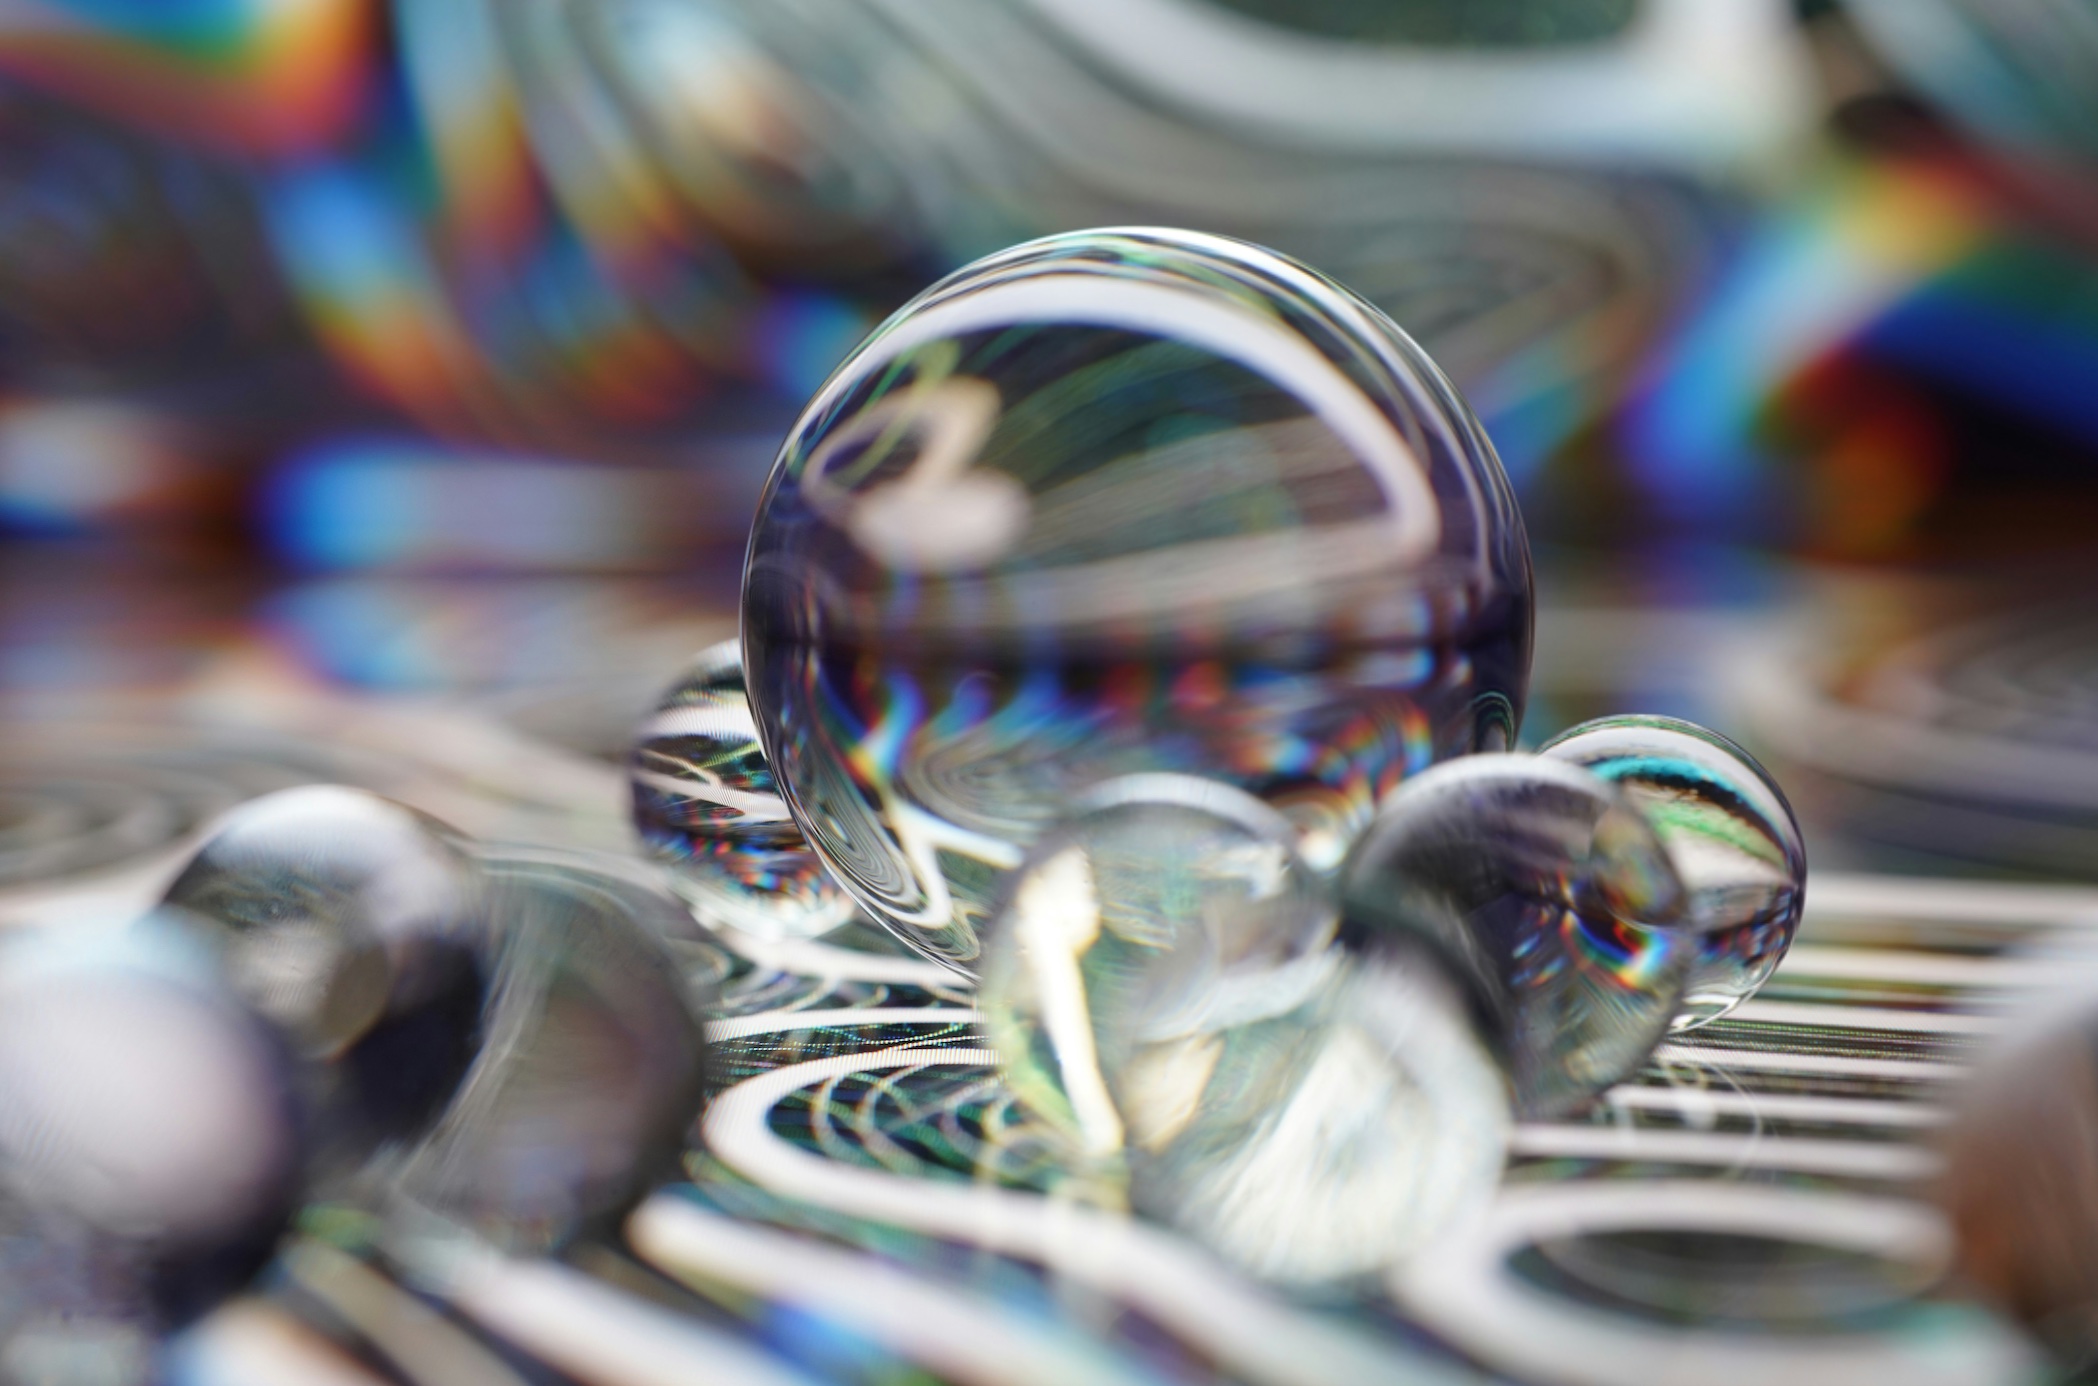 Acrylic bubbles; image by FlyD, via Unsplash.com.